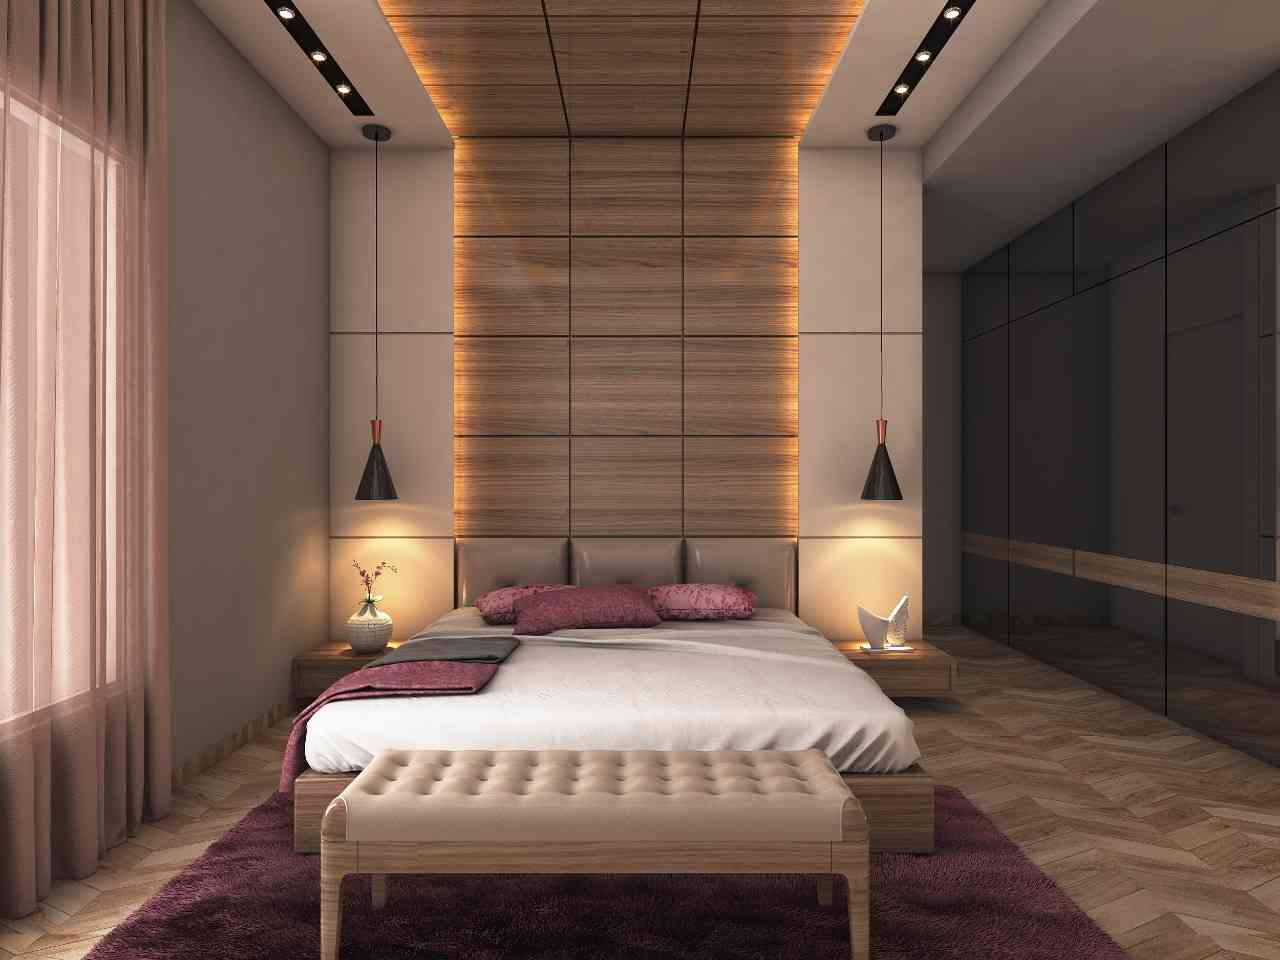 Luxury Master Bedroom Design With Ambient Interior Design